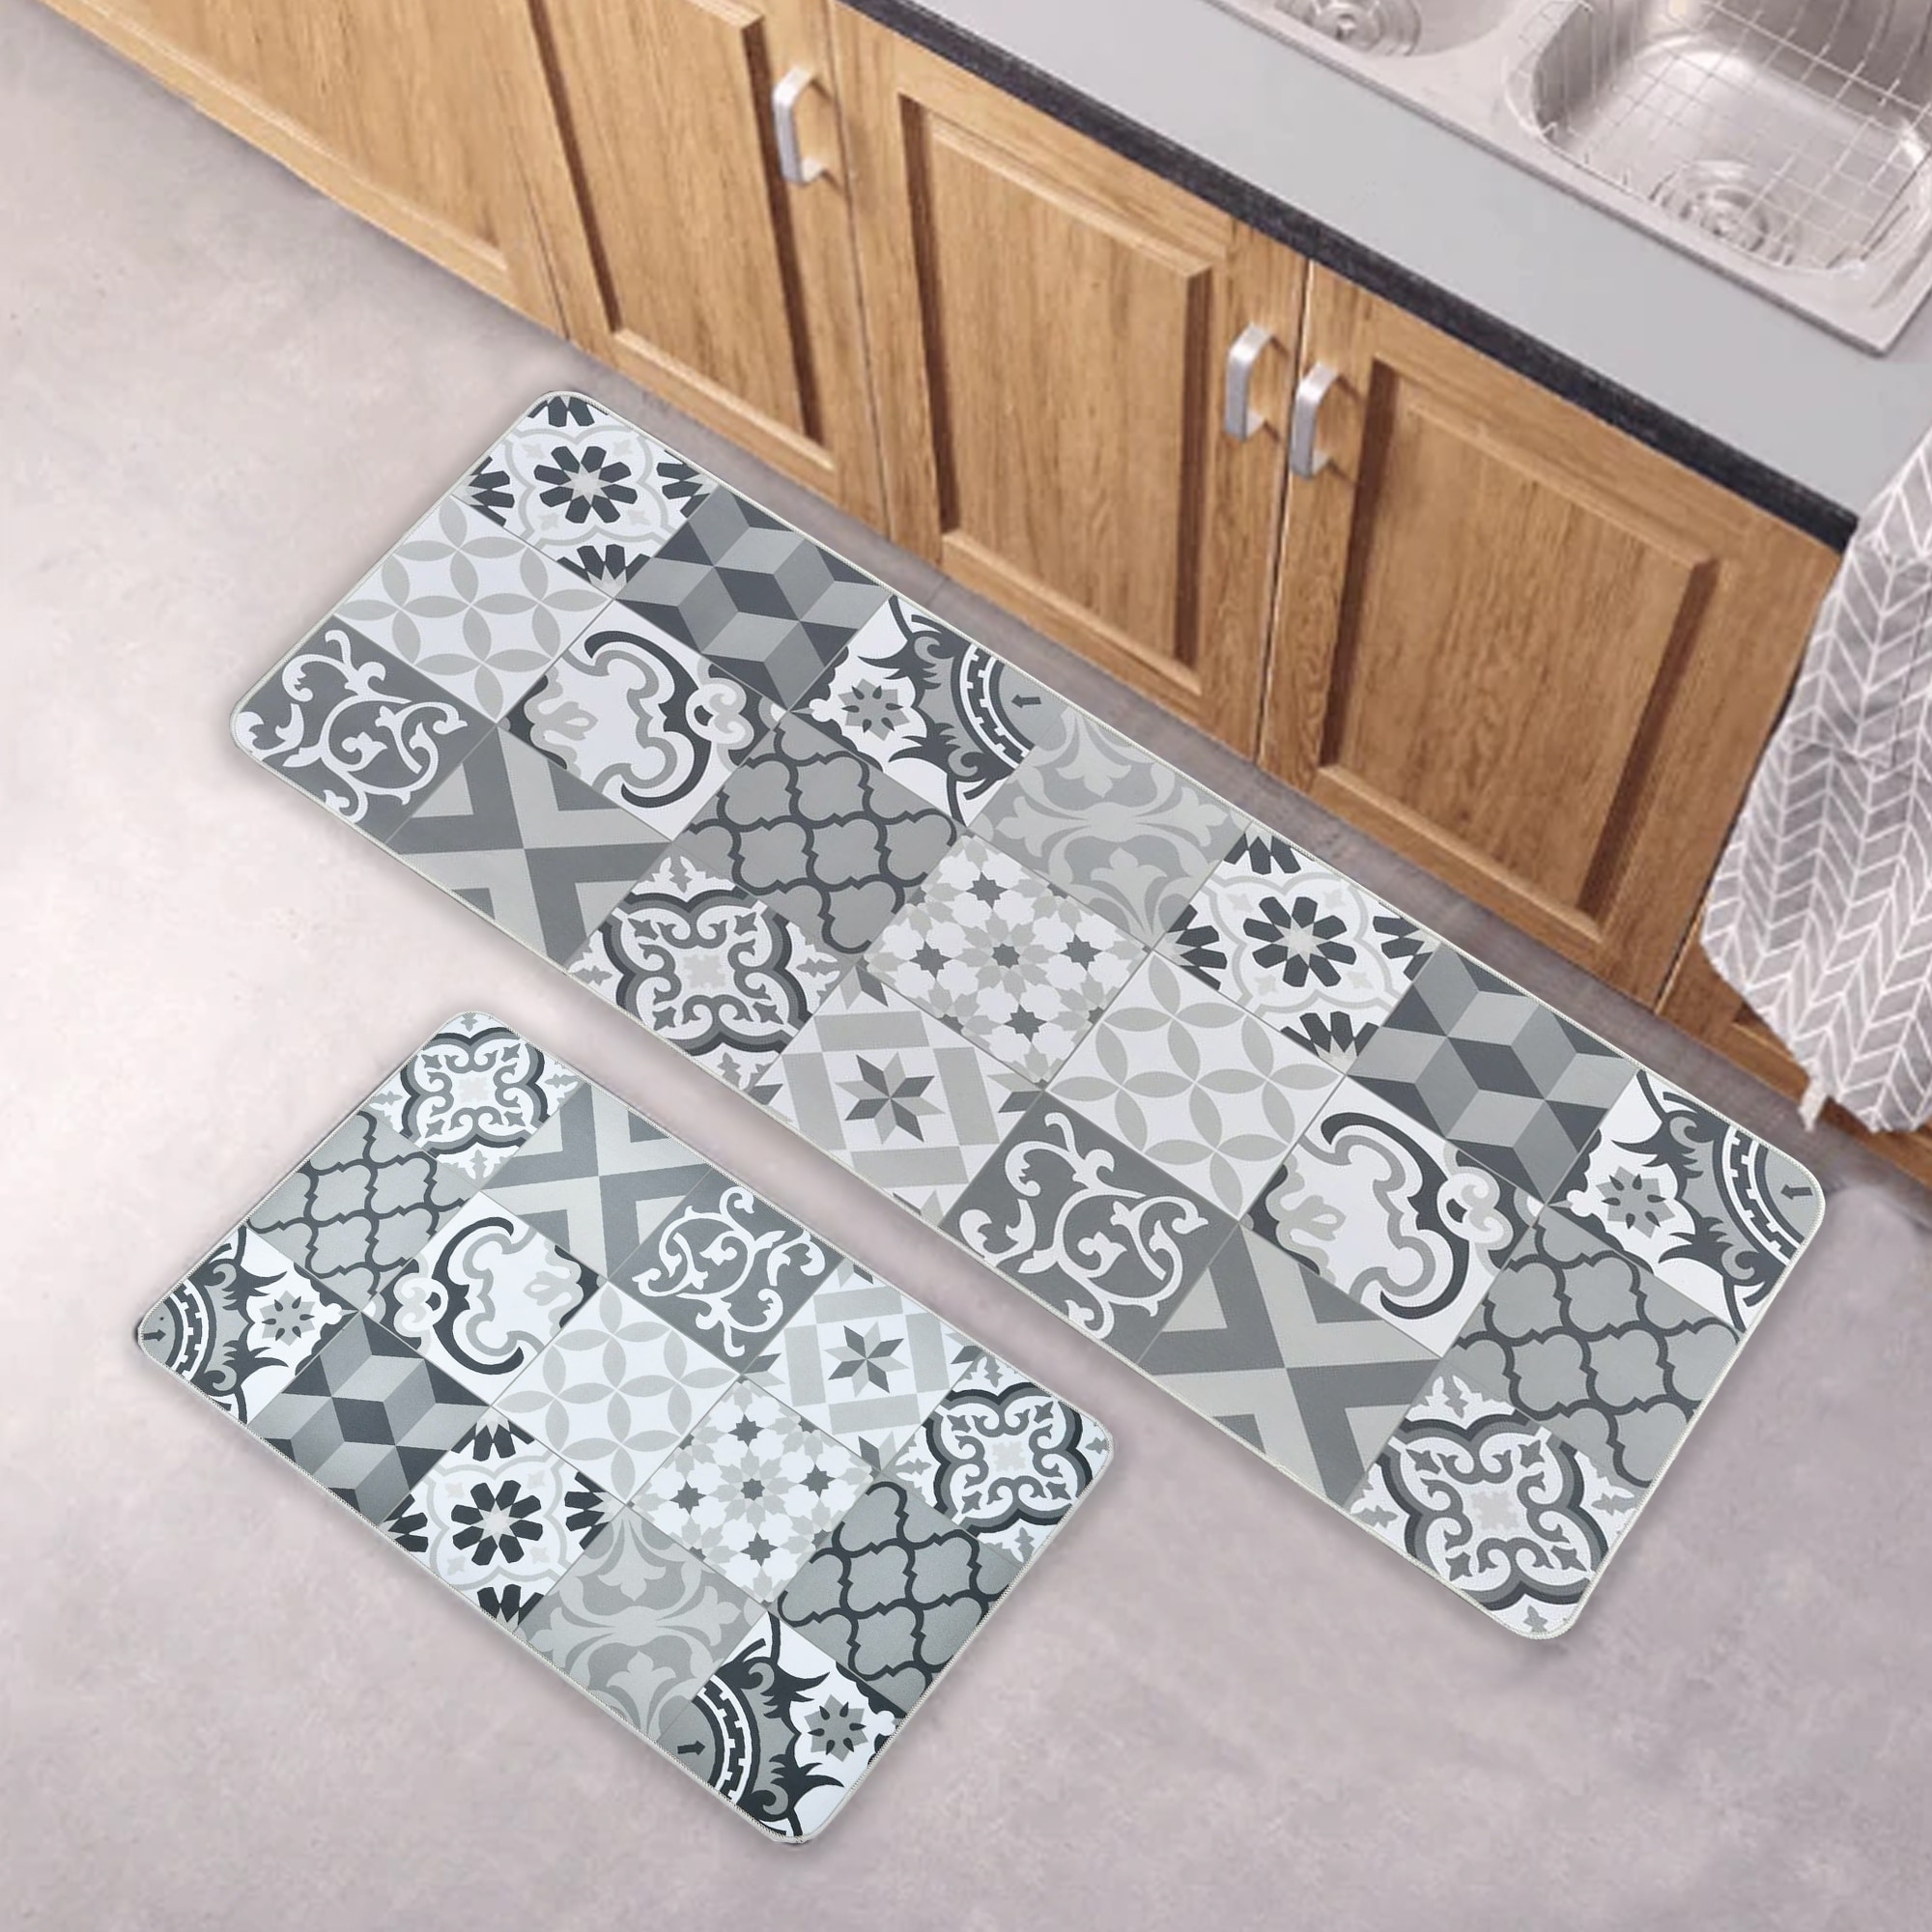 https://ak1.ostkcdn.com/images/products/is/images/direct/9858bb7d0286a069518e3d57805167cea562f25f/Ceramic-Tile-Pattern-Anti-Fatigue-Kitchen-Floor-Mat-32%22-x-20%22.jpg